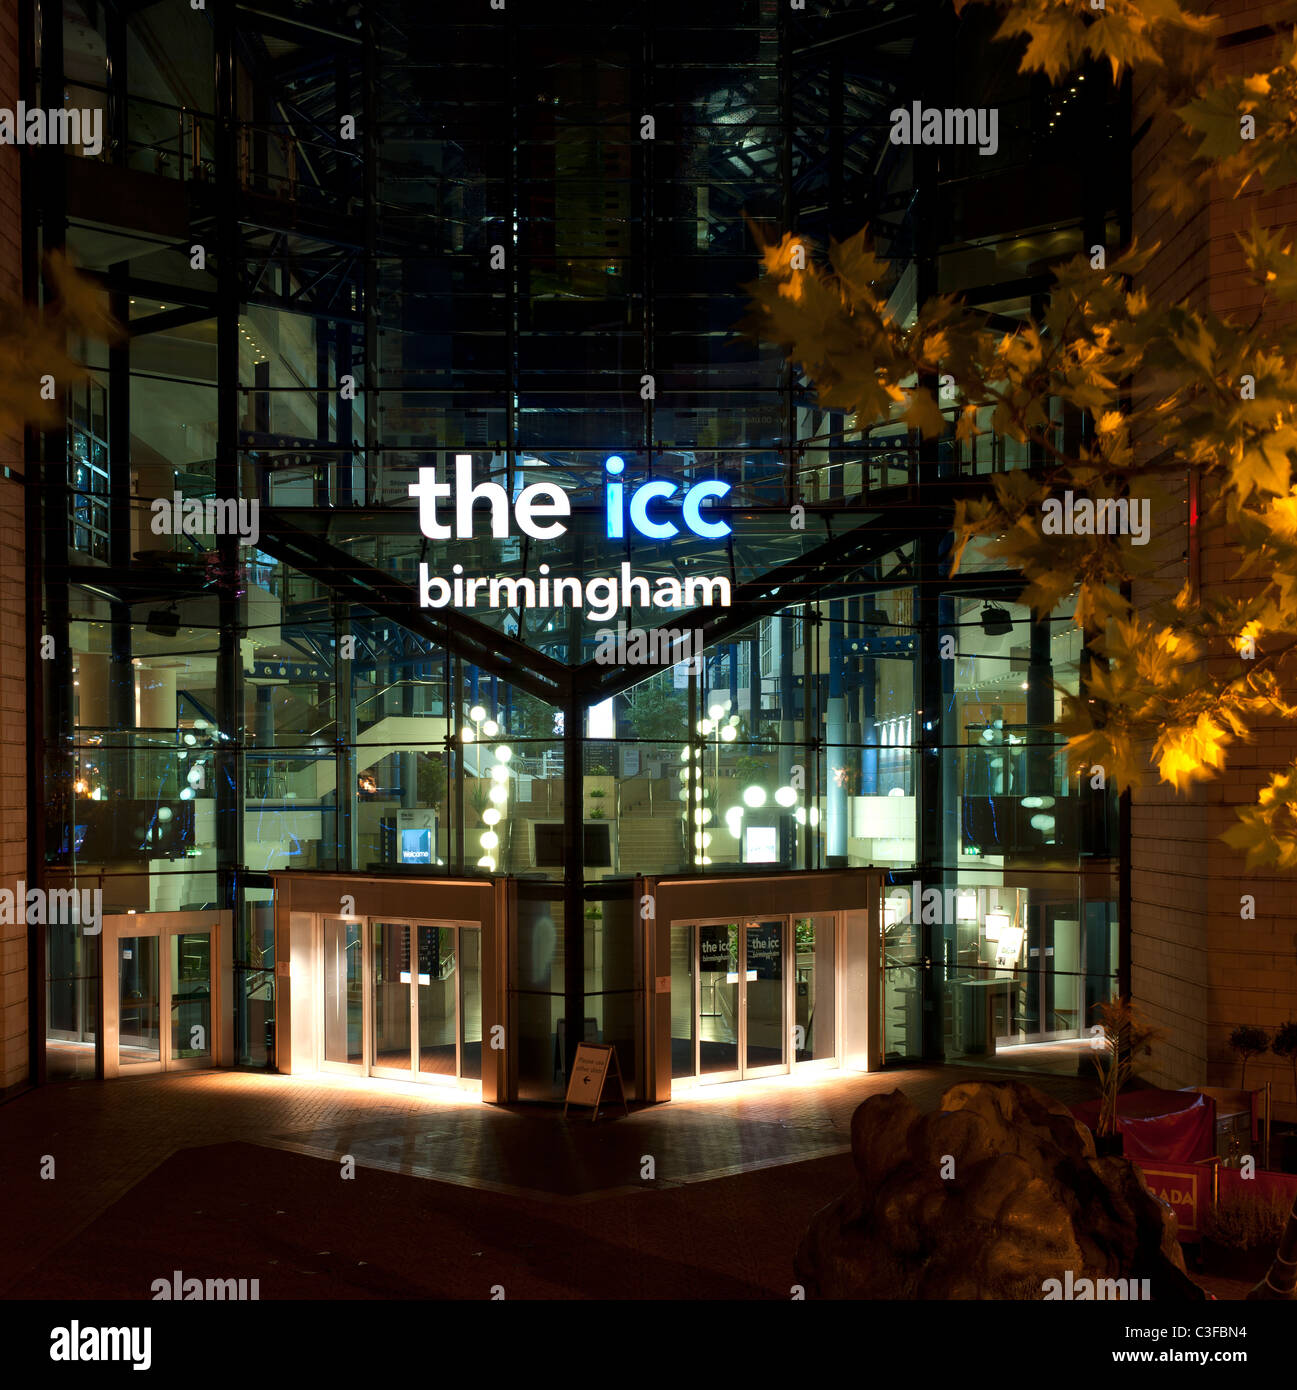 Notte fotografia di un ingresso per l'ICC Birmingham, Birmingham, West Midlands, Inghilterra, Regno Unito. Foto Stock